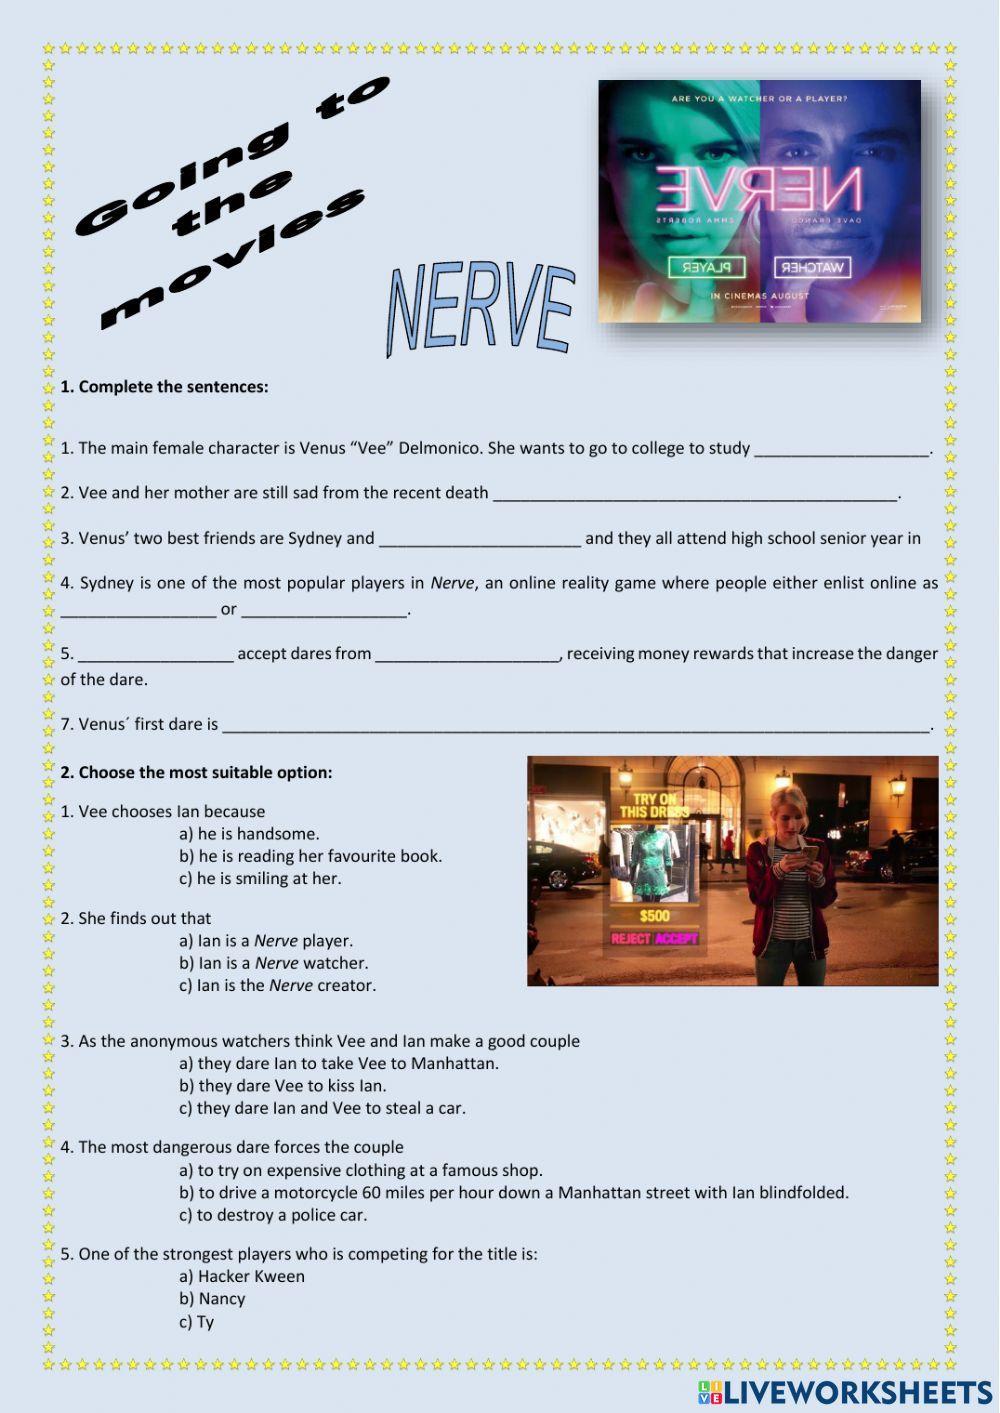 Nerve movie worksheet